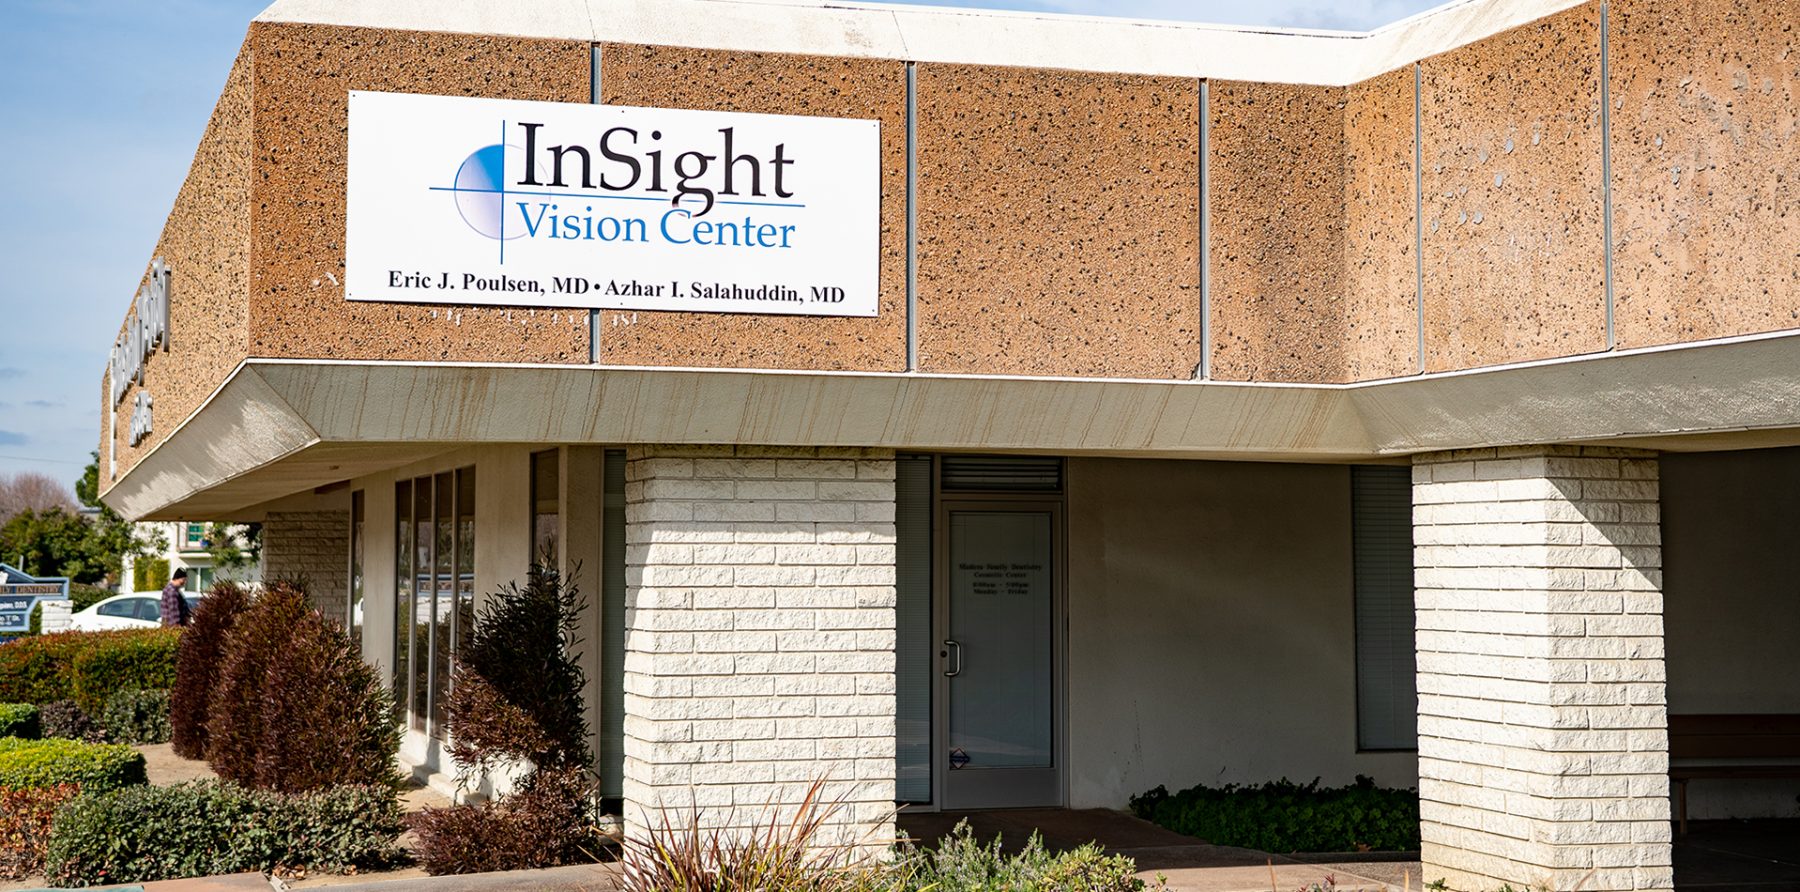 Camarena Health - Insight Vision Center